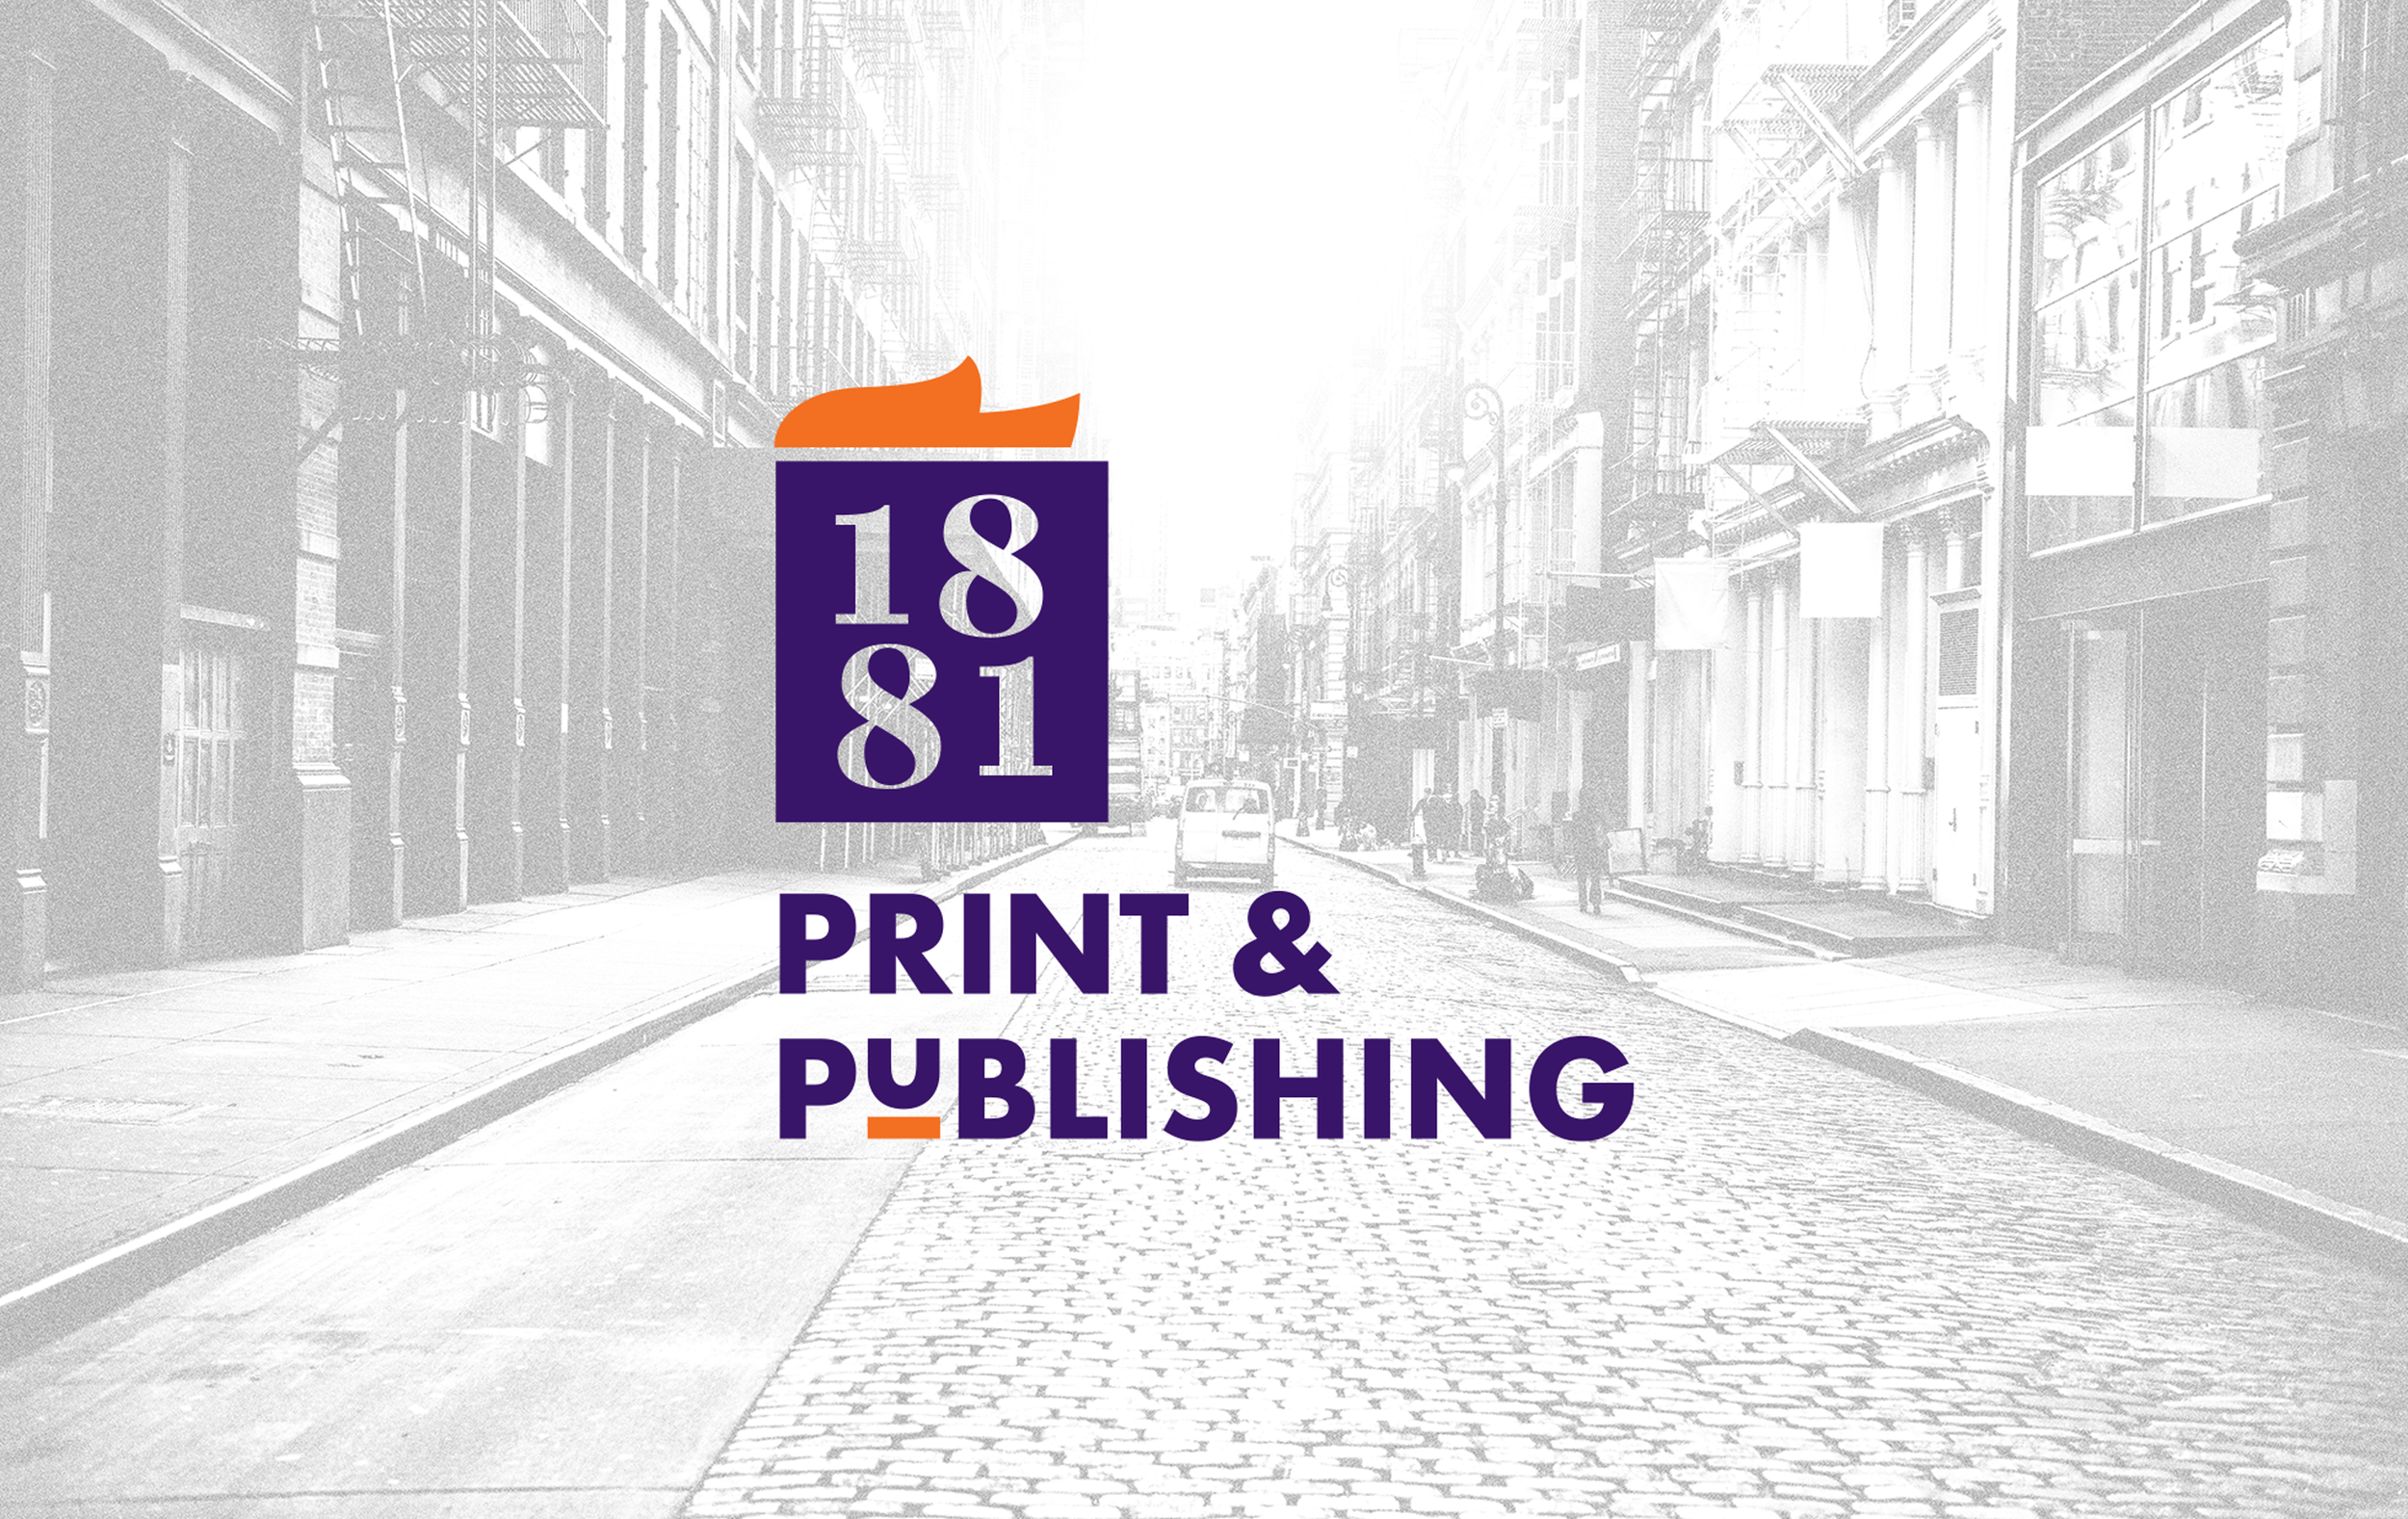 1881 Print & Publishing